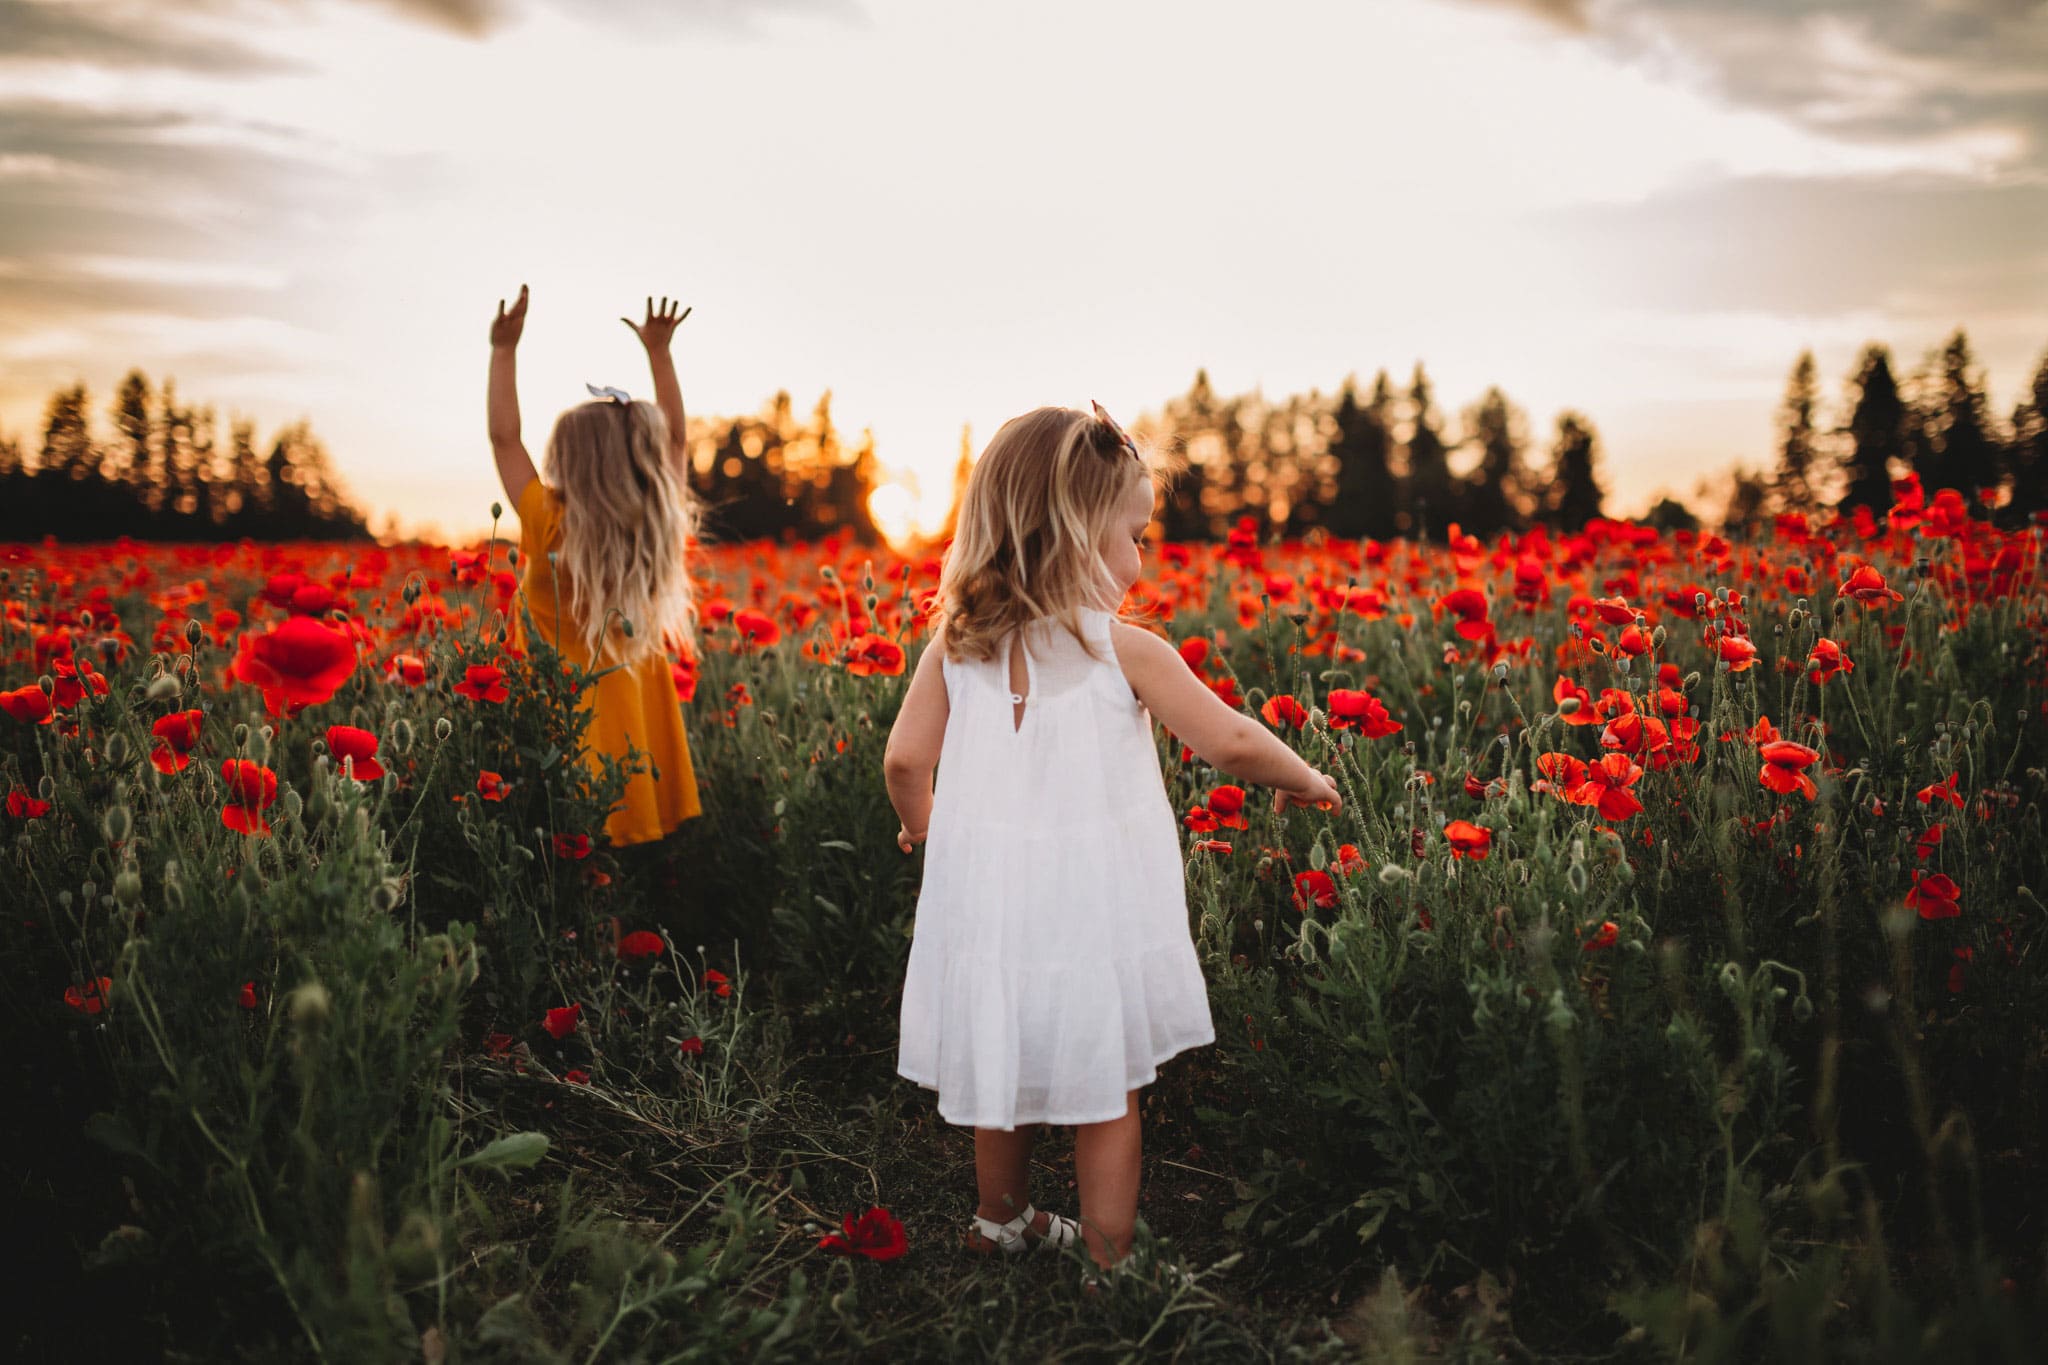 Sweet girls in field of red poppies